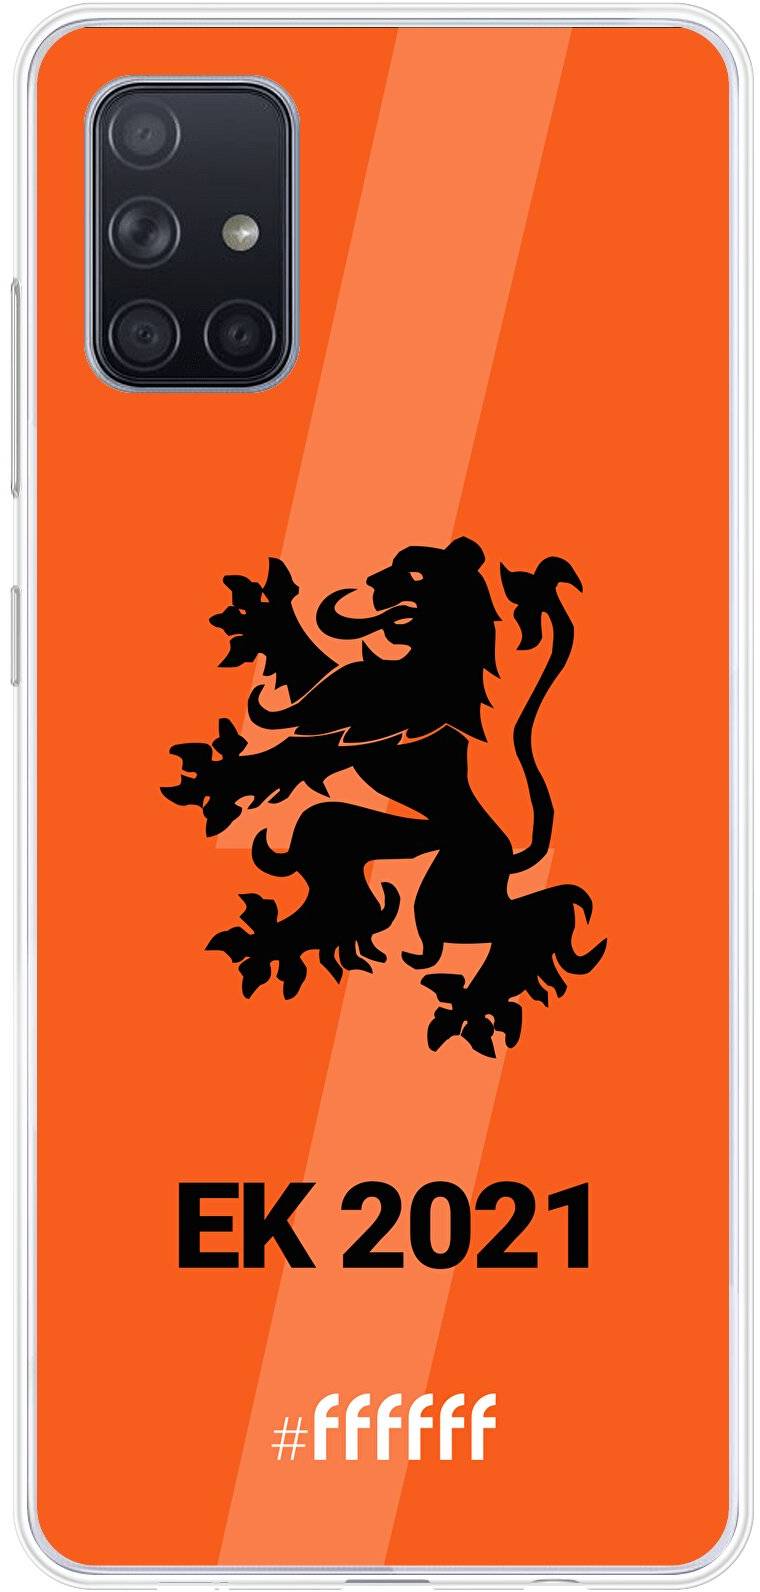 Nederlands Elftal - EK 2021 Galaxy A71